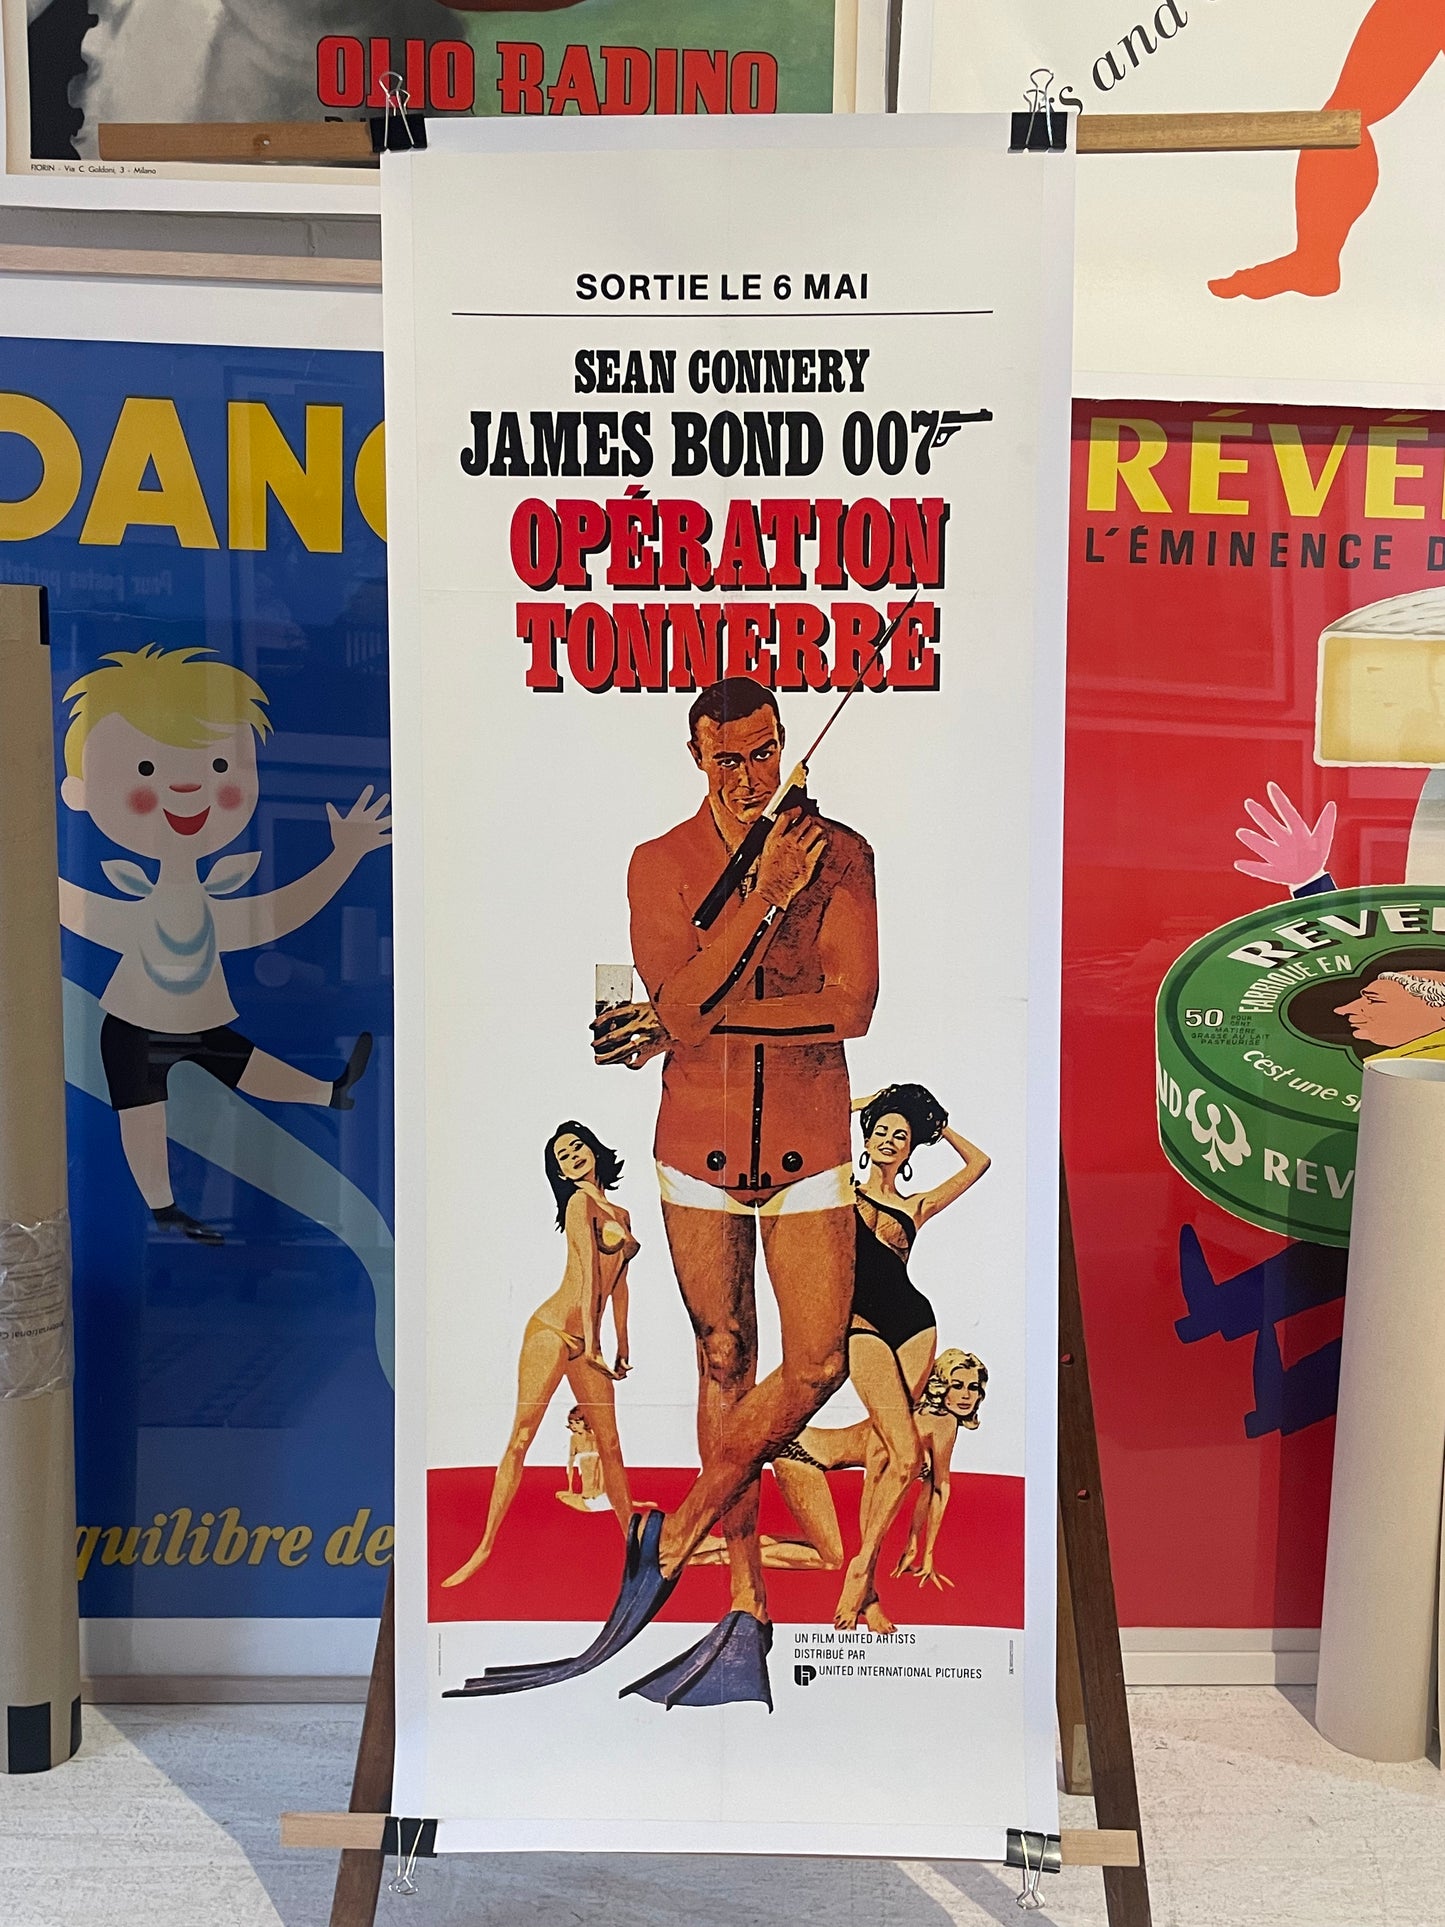 007 Bond 'Thunderball' Original Film Poster